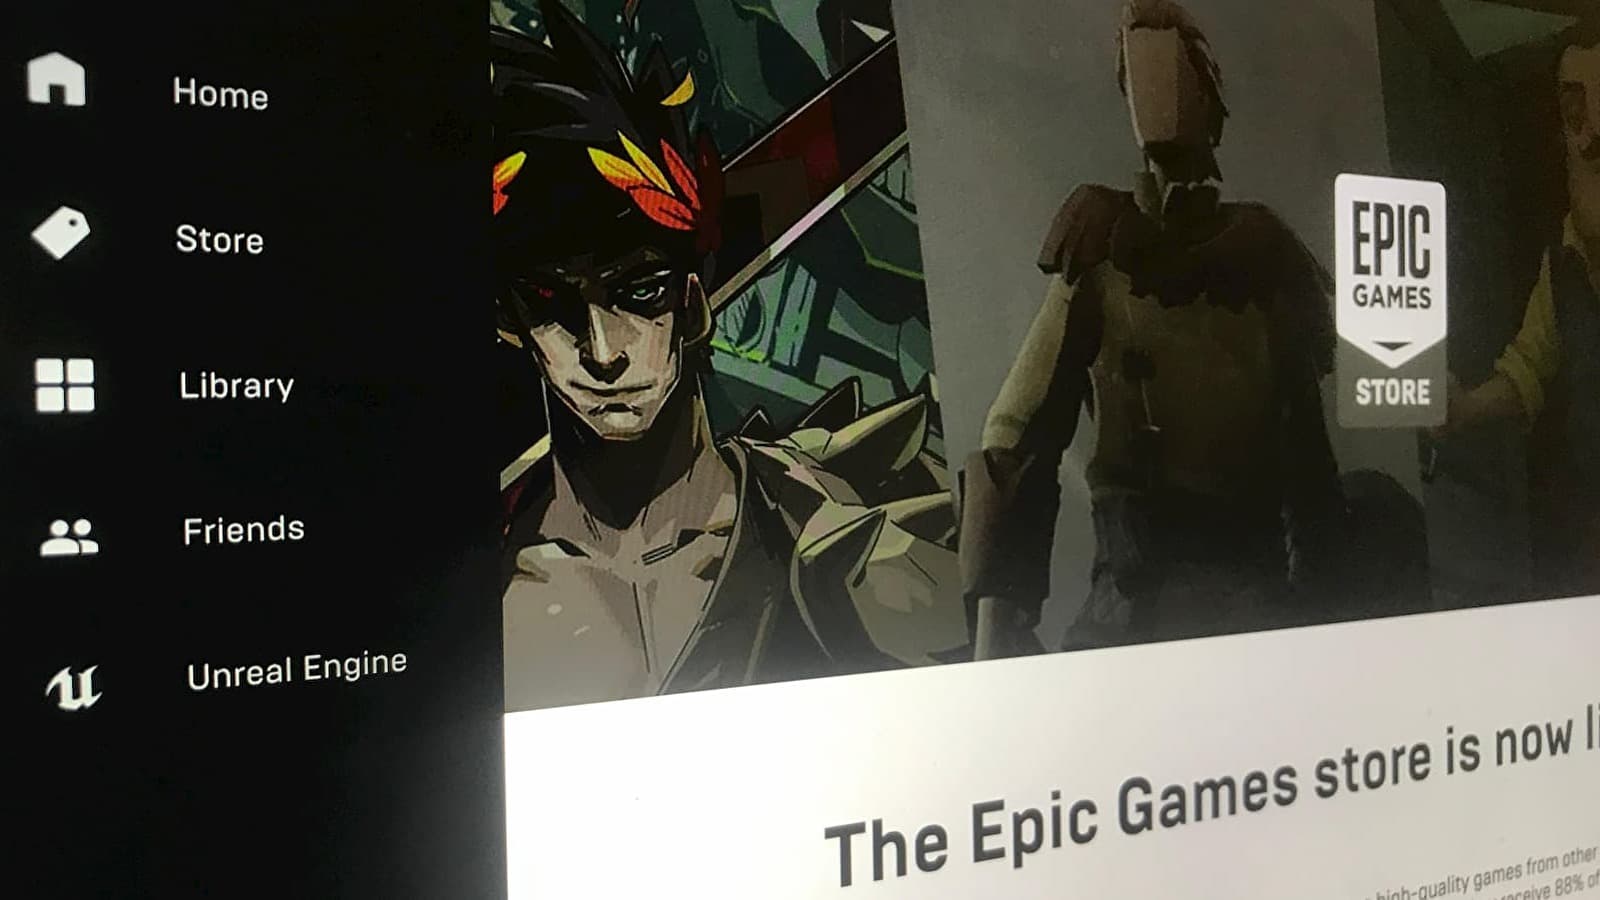 Epic Games Storeが抱えるビジネス上の課題